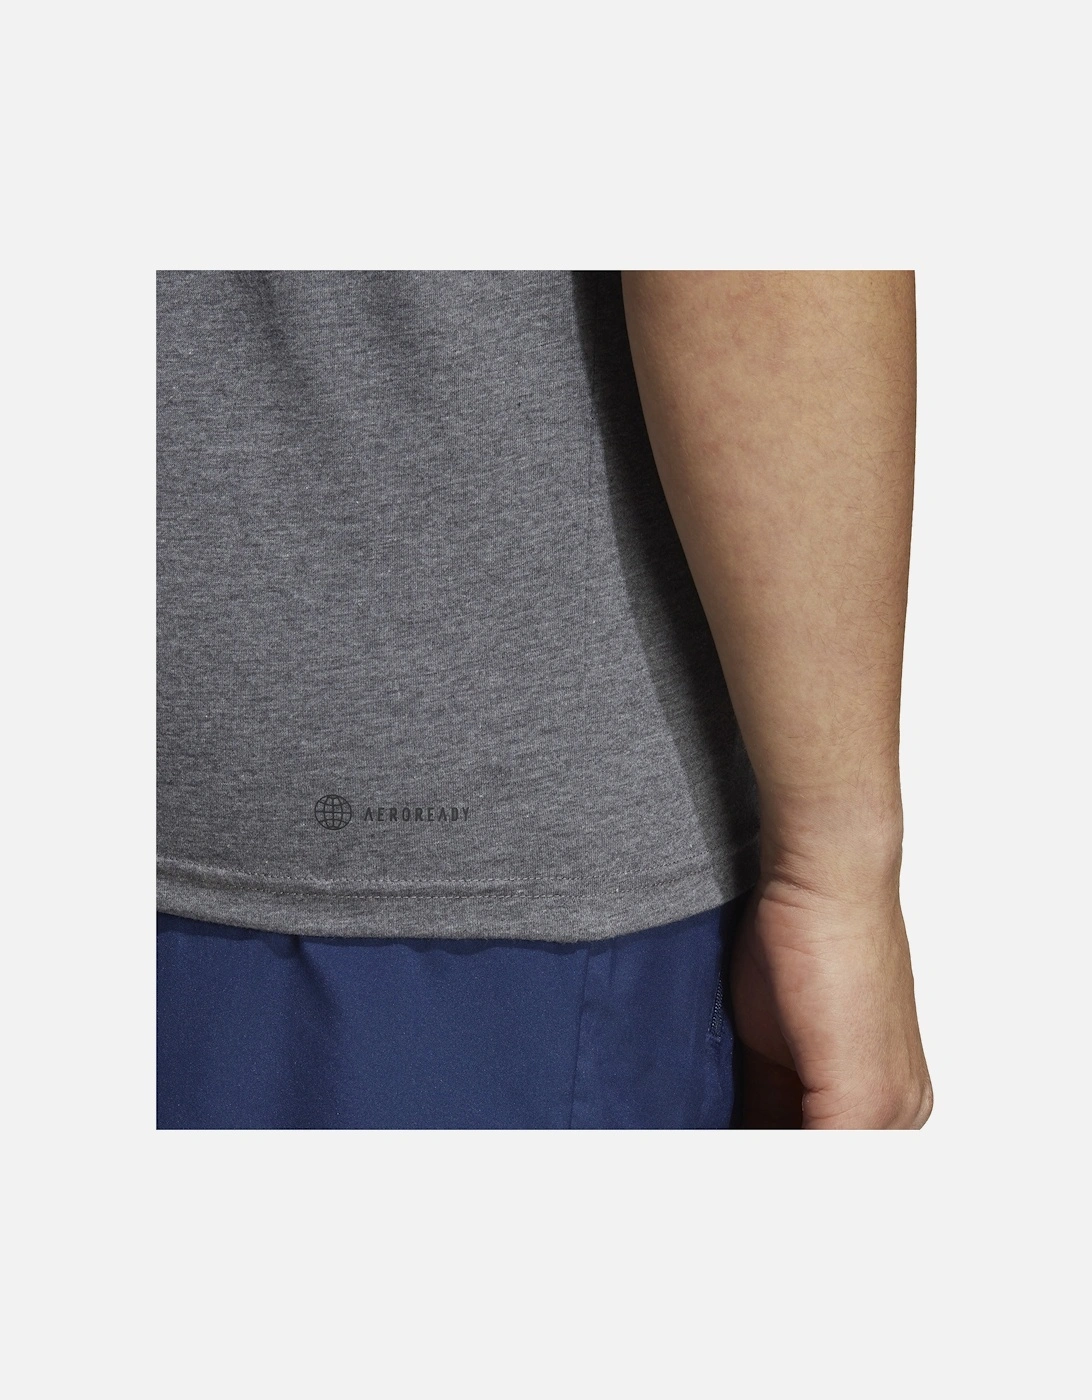 Mens Training Sleeveless T-Shirt (Grey)